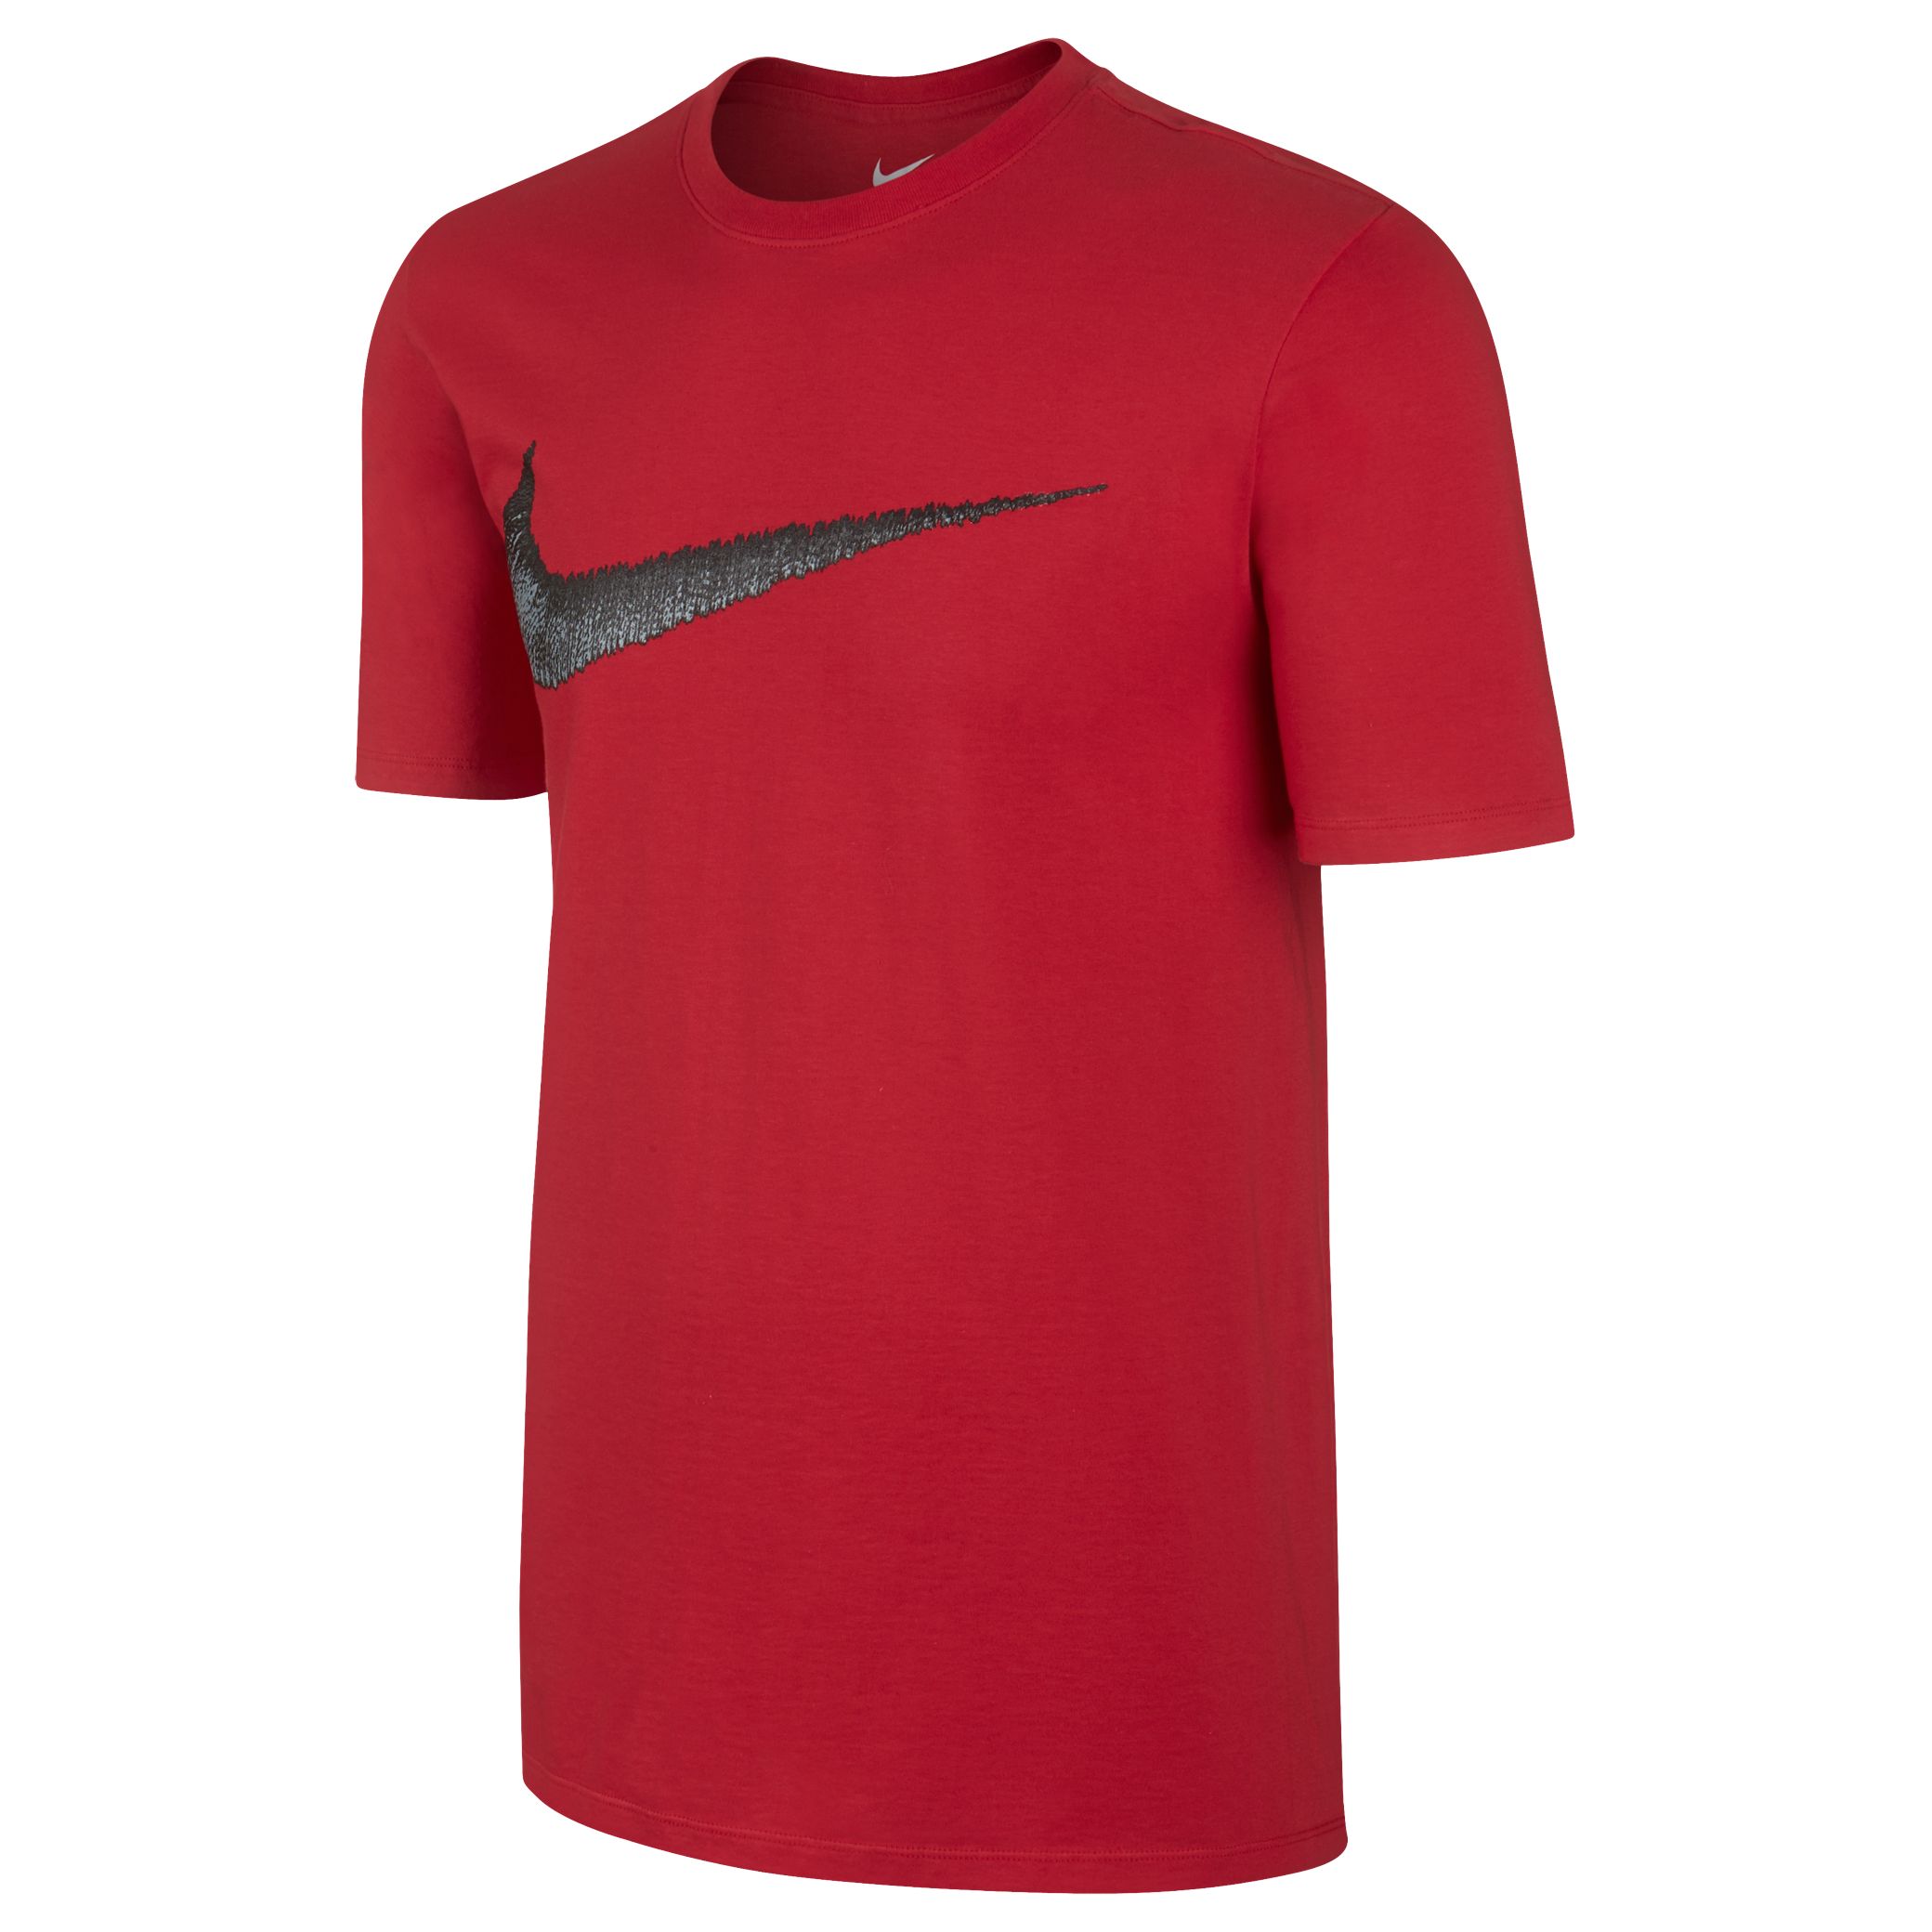 Nike Sportswear Swoosh Cotton T-Shirt, Red/Black, XL